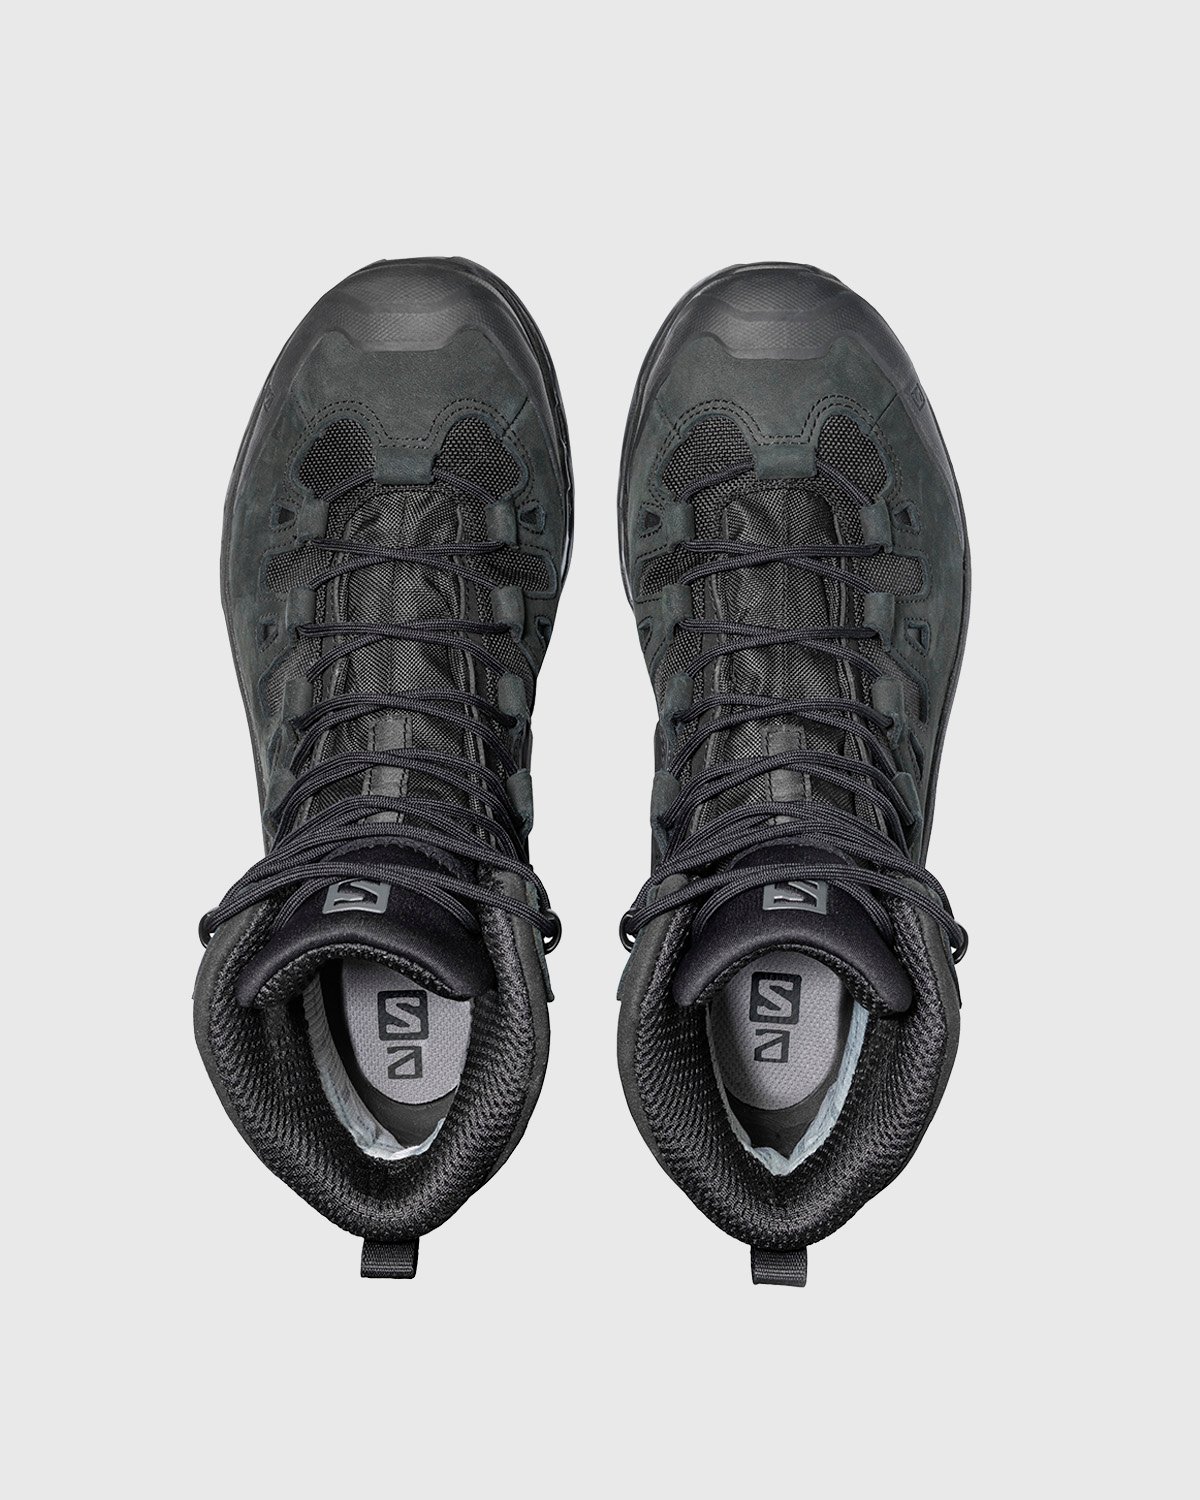 Salomon - Quest 4D GTX Advanced Black - Footwear - Black - Image 3